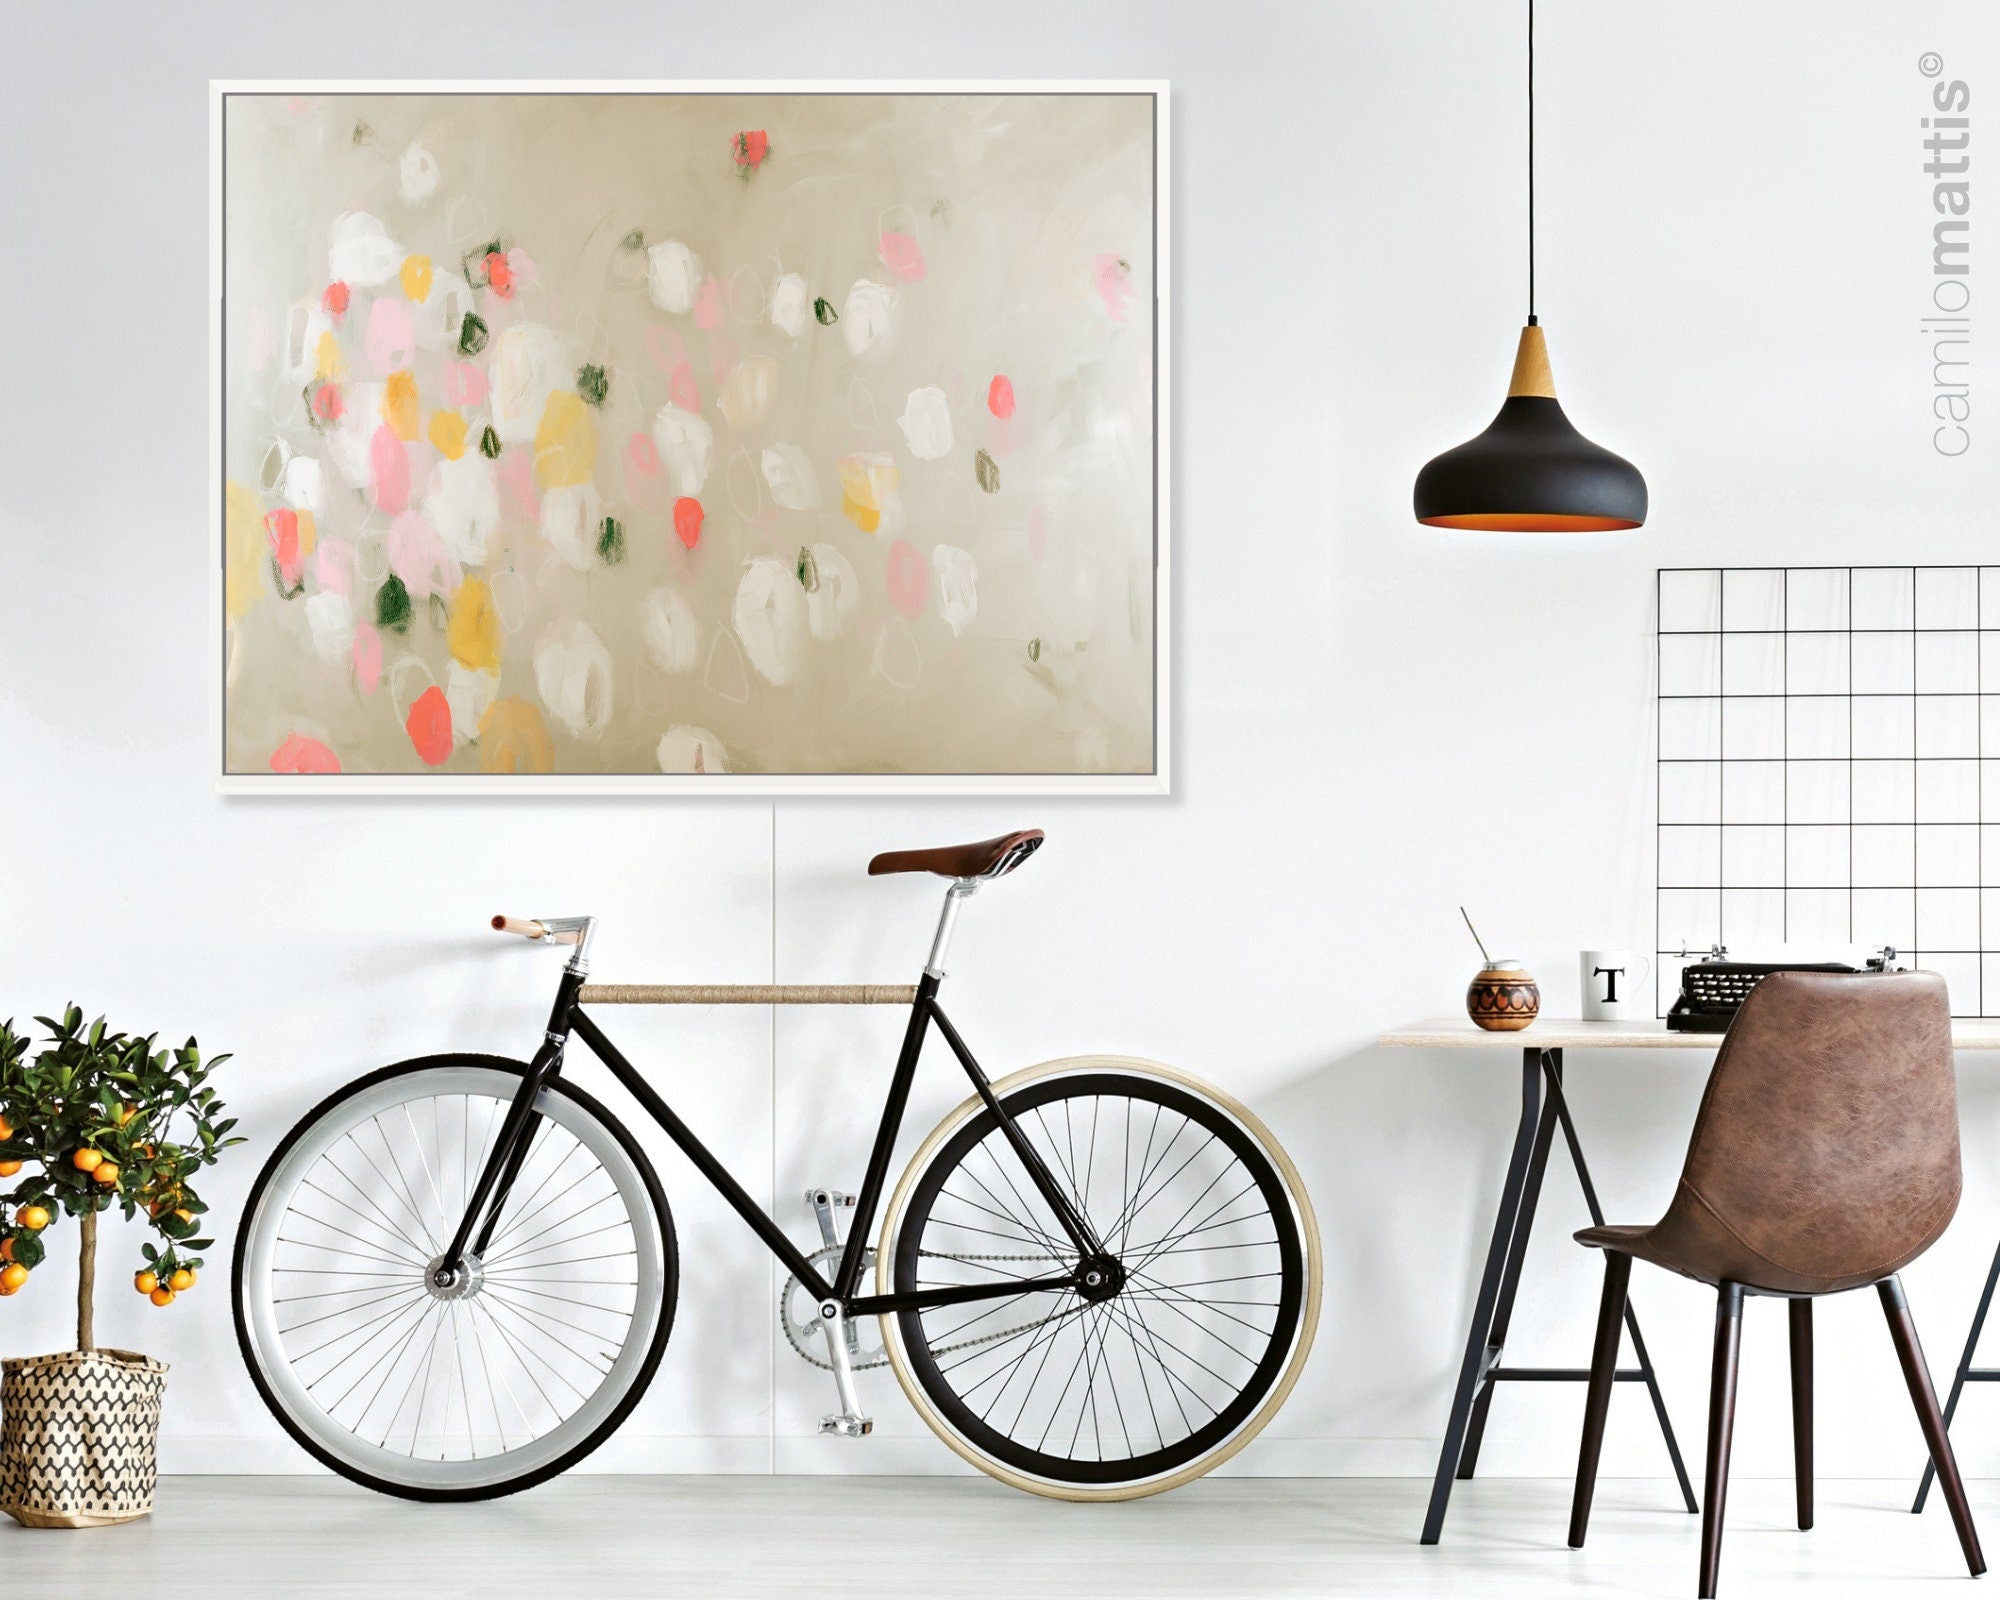 Flower art living room decor print, comfort colors oversized wall art 24x36 art prints